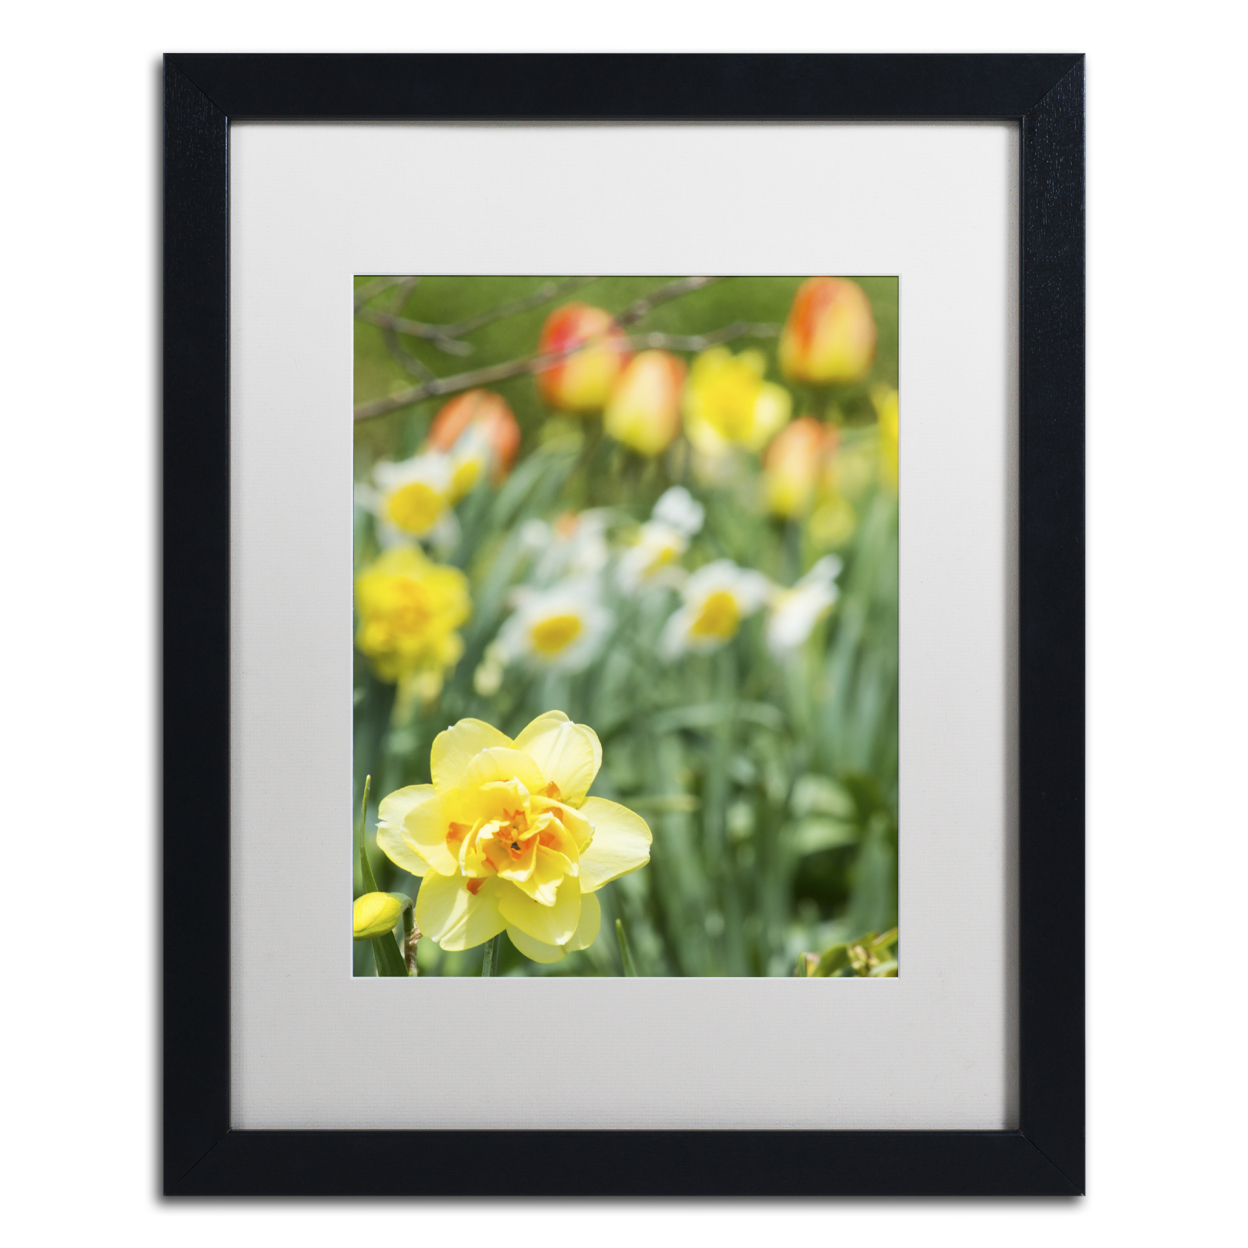 Kurt Shaffer 'Double Headed Daffodil' Black Wooden Framed Art 18 X 22 Inches